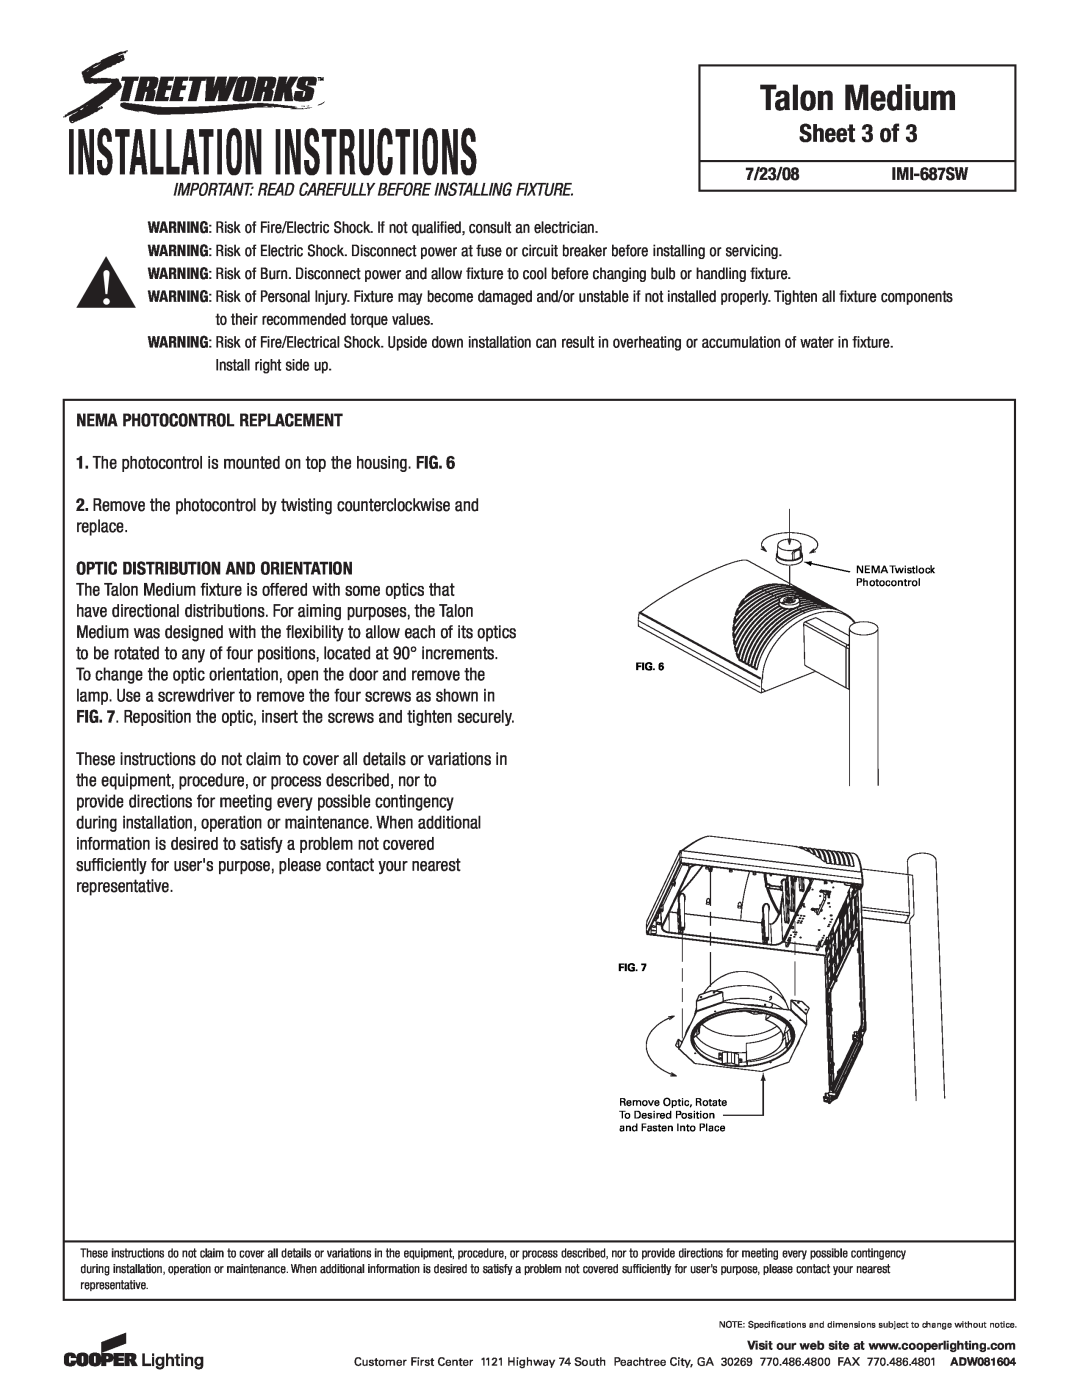 Cooper Lighting TMU/TLU installation instructions Sheet 3 of, Installation Instructions, Talon Medium, 7/23/08IMI-687SW 